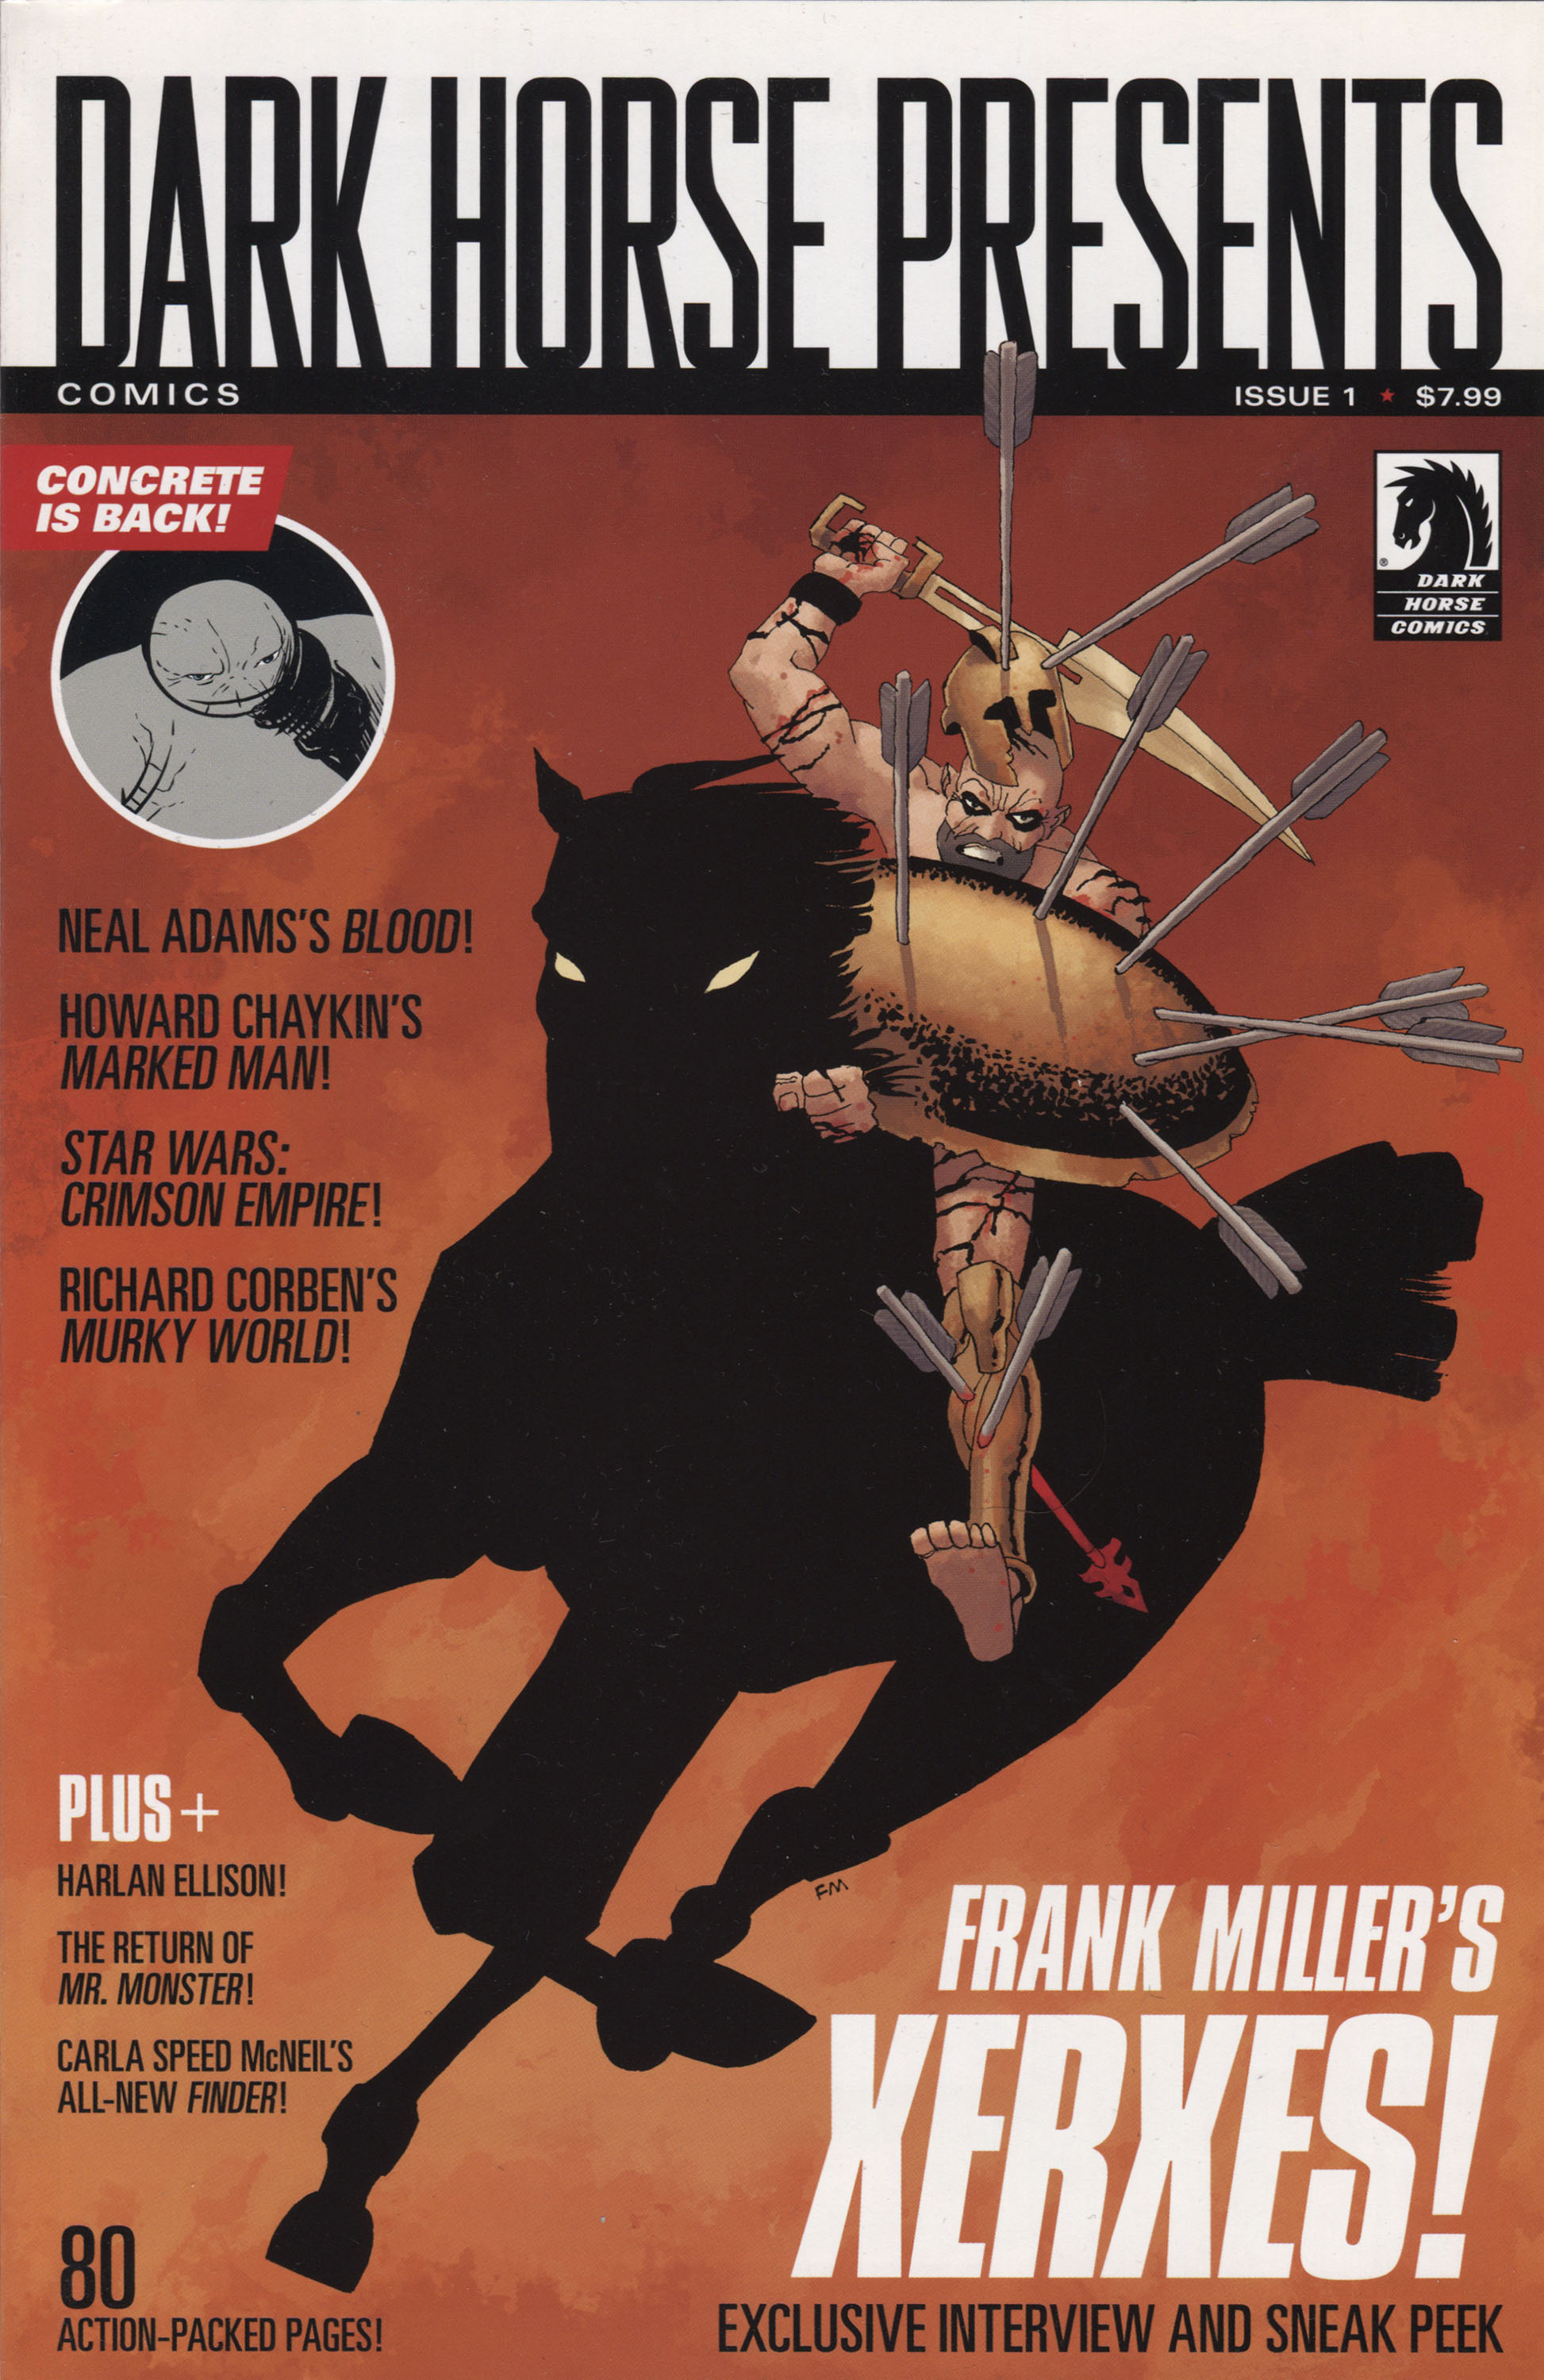 Dark Horse Presents, vol 3 #1, cover, art by Frank Miller